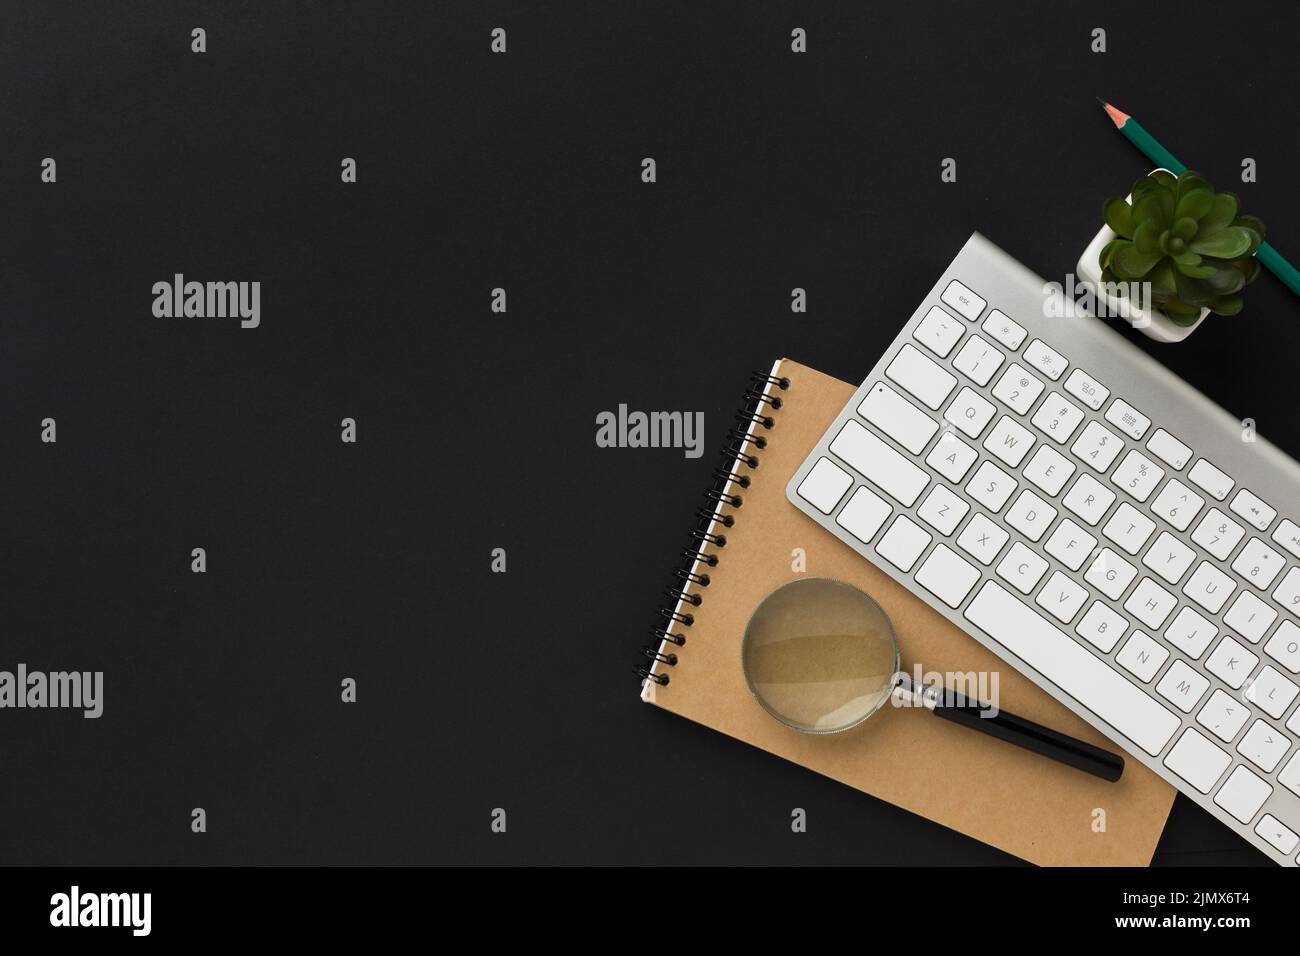 Flat lay work desktop with notebook keyboard Stock Photo